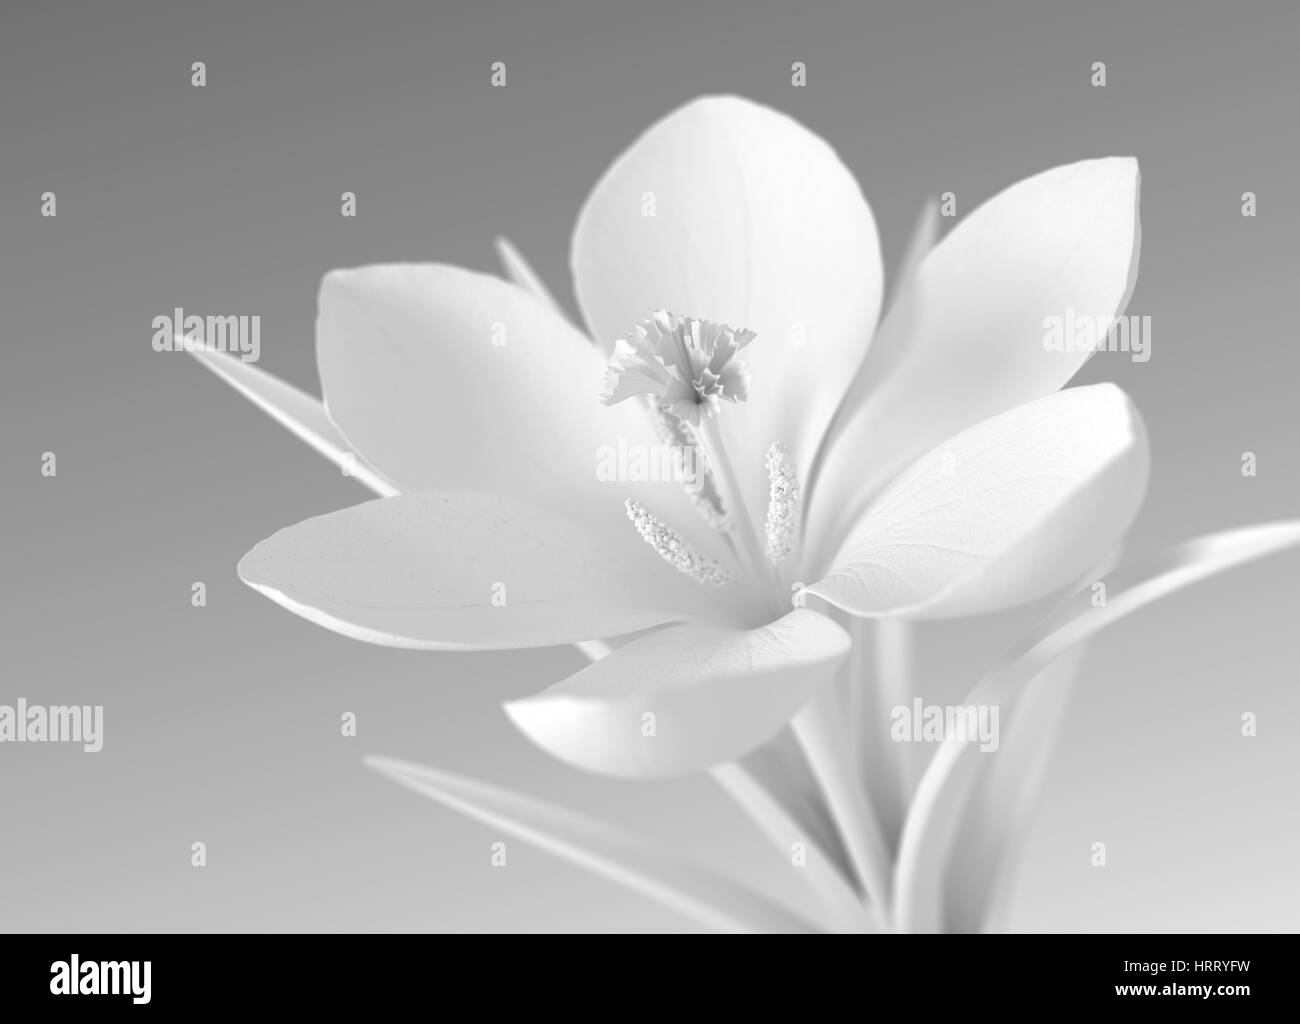 White Flower On Gradient Background. 3D Illustration. Stock Photo